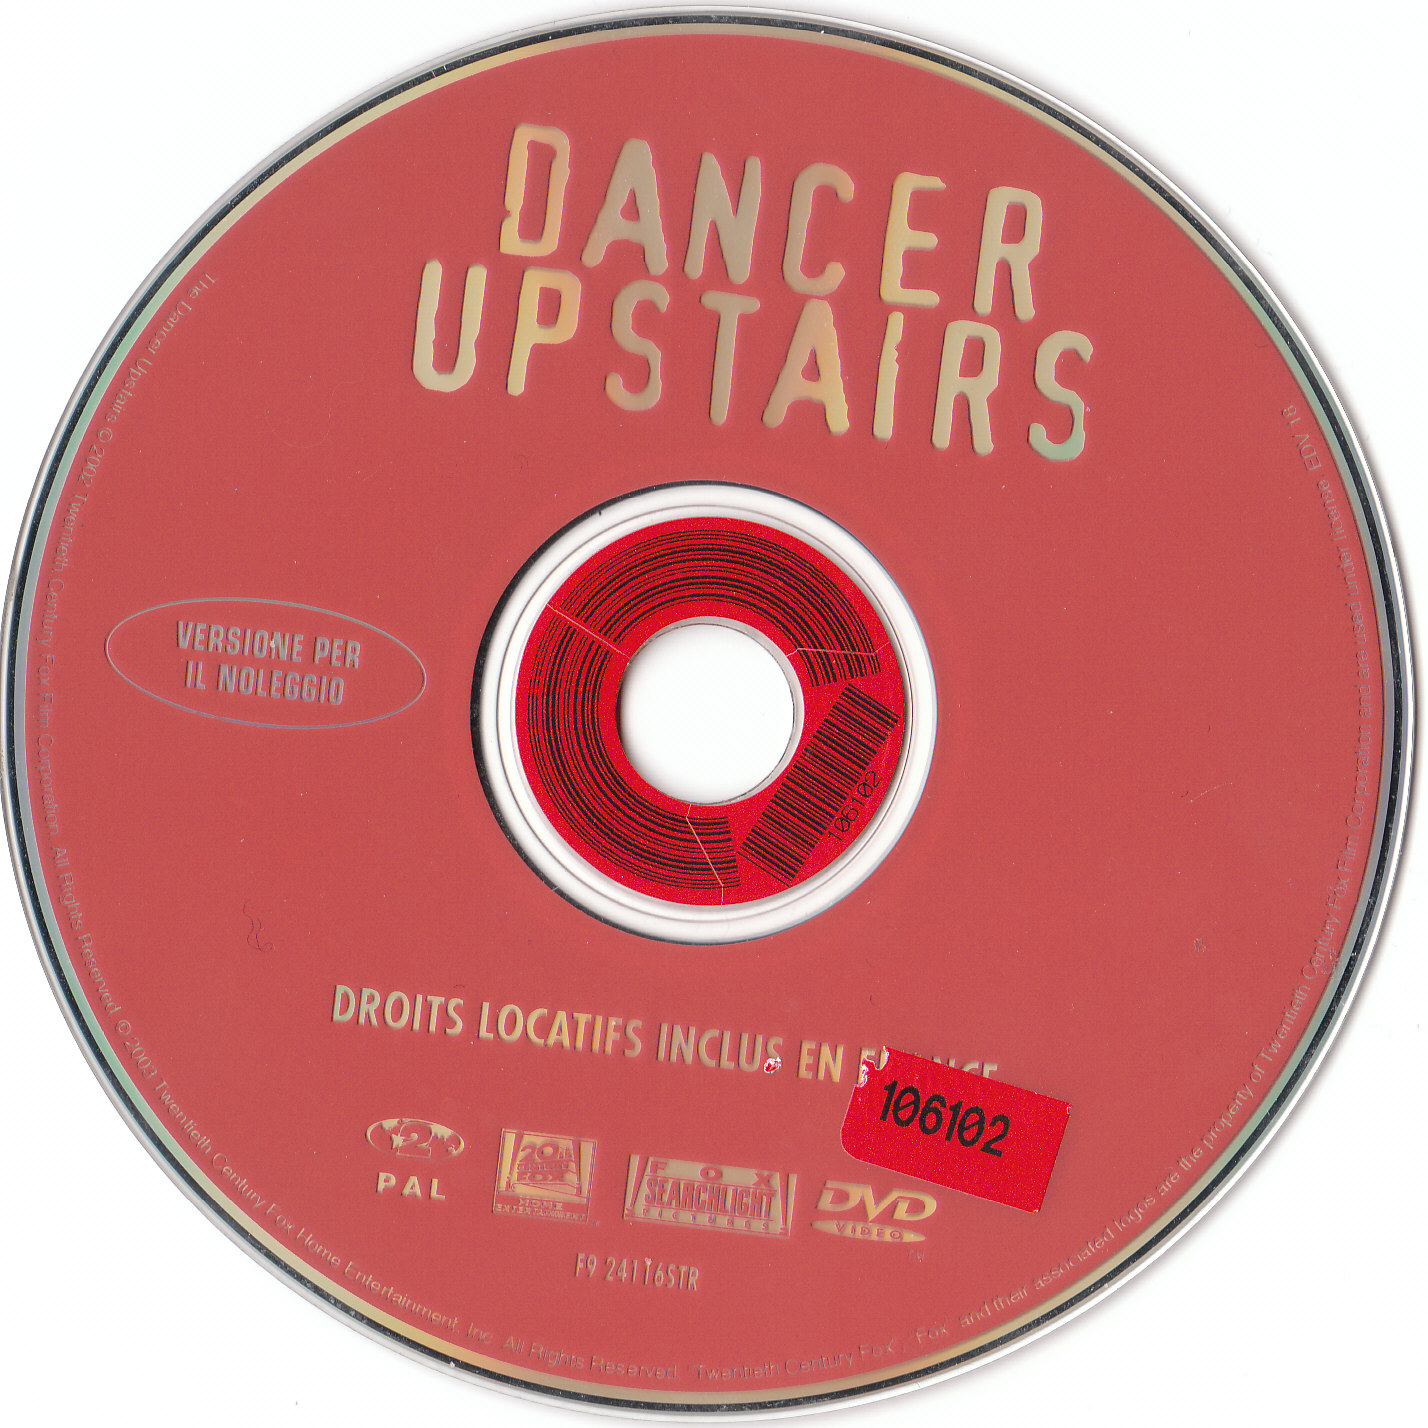 Dancer upstairs